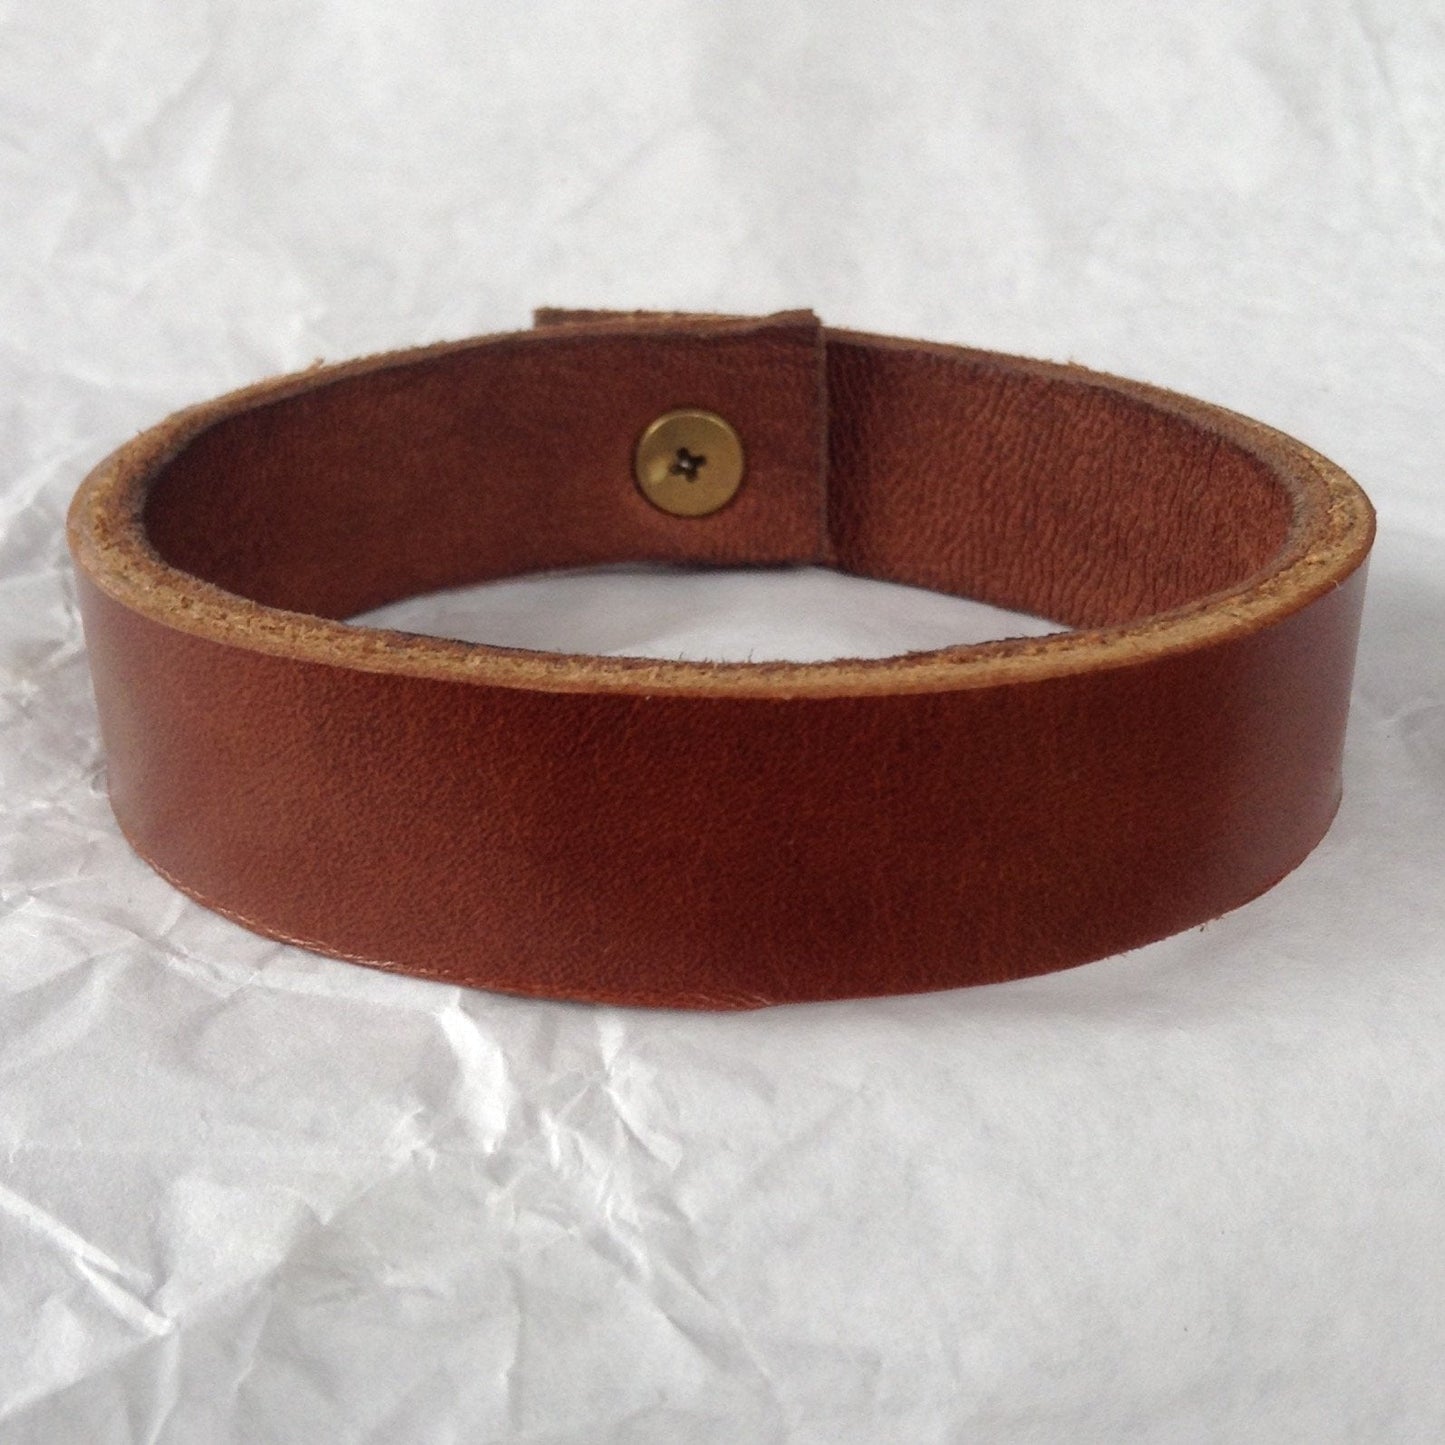 Classic Goatskin lined Caramel leather bracelet.